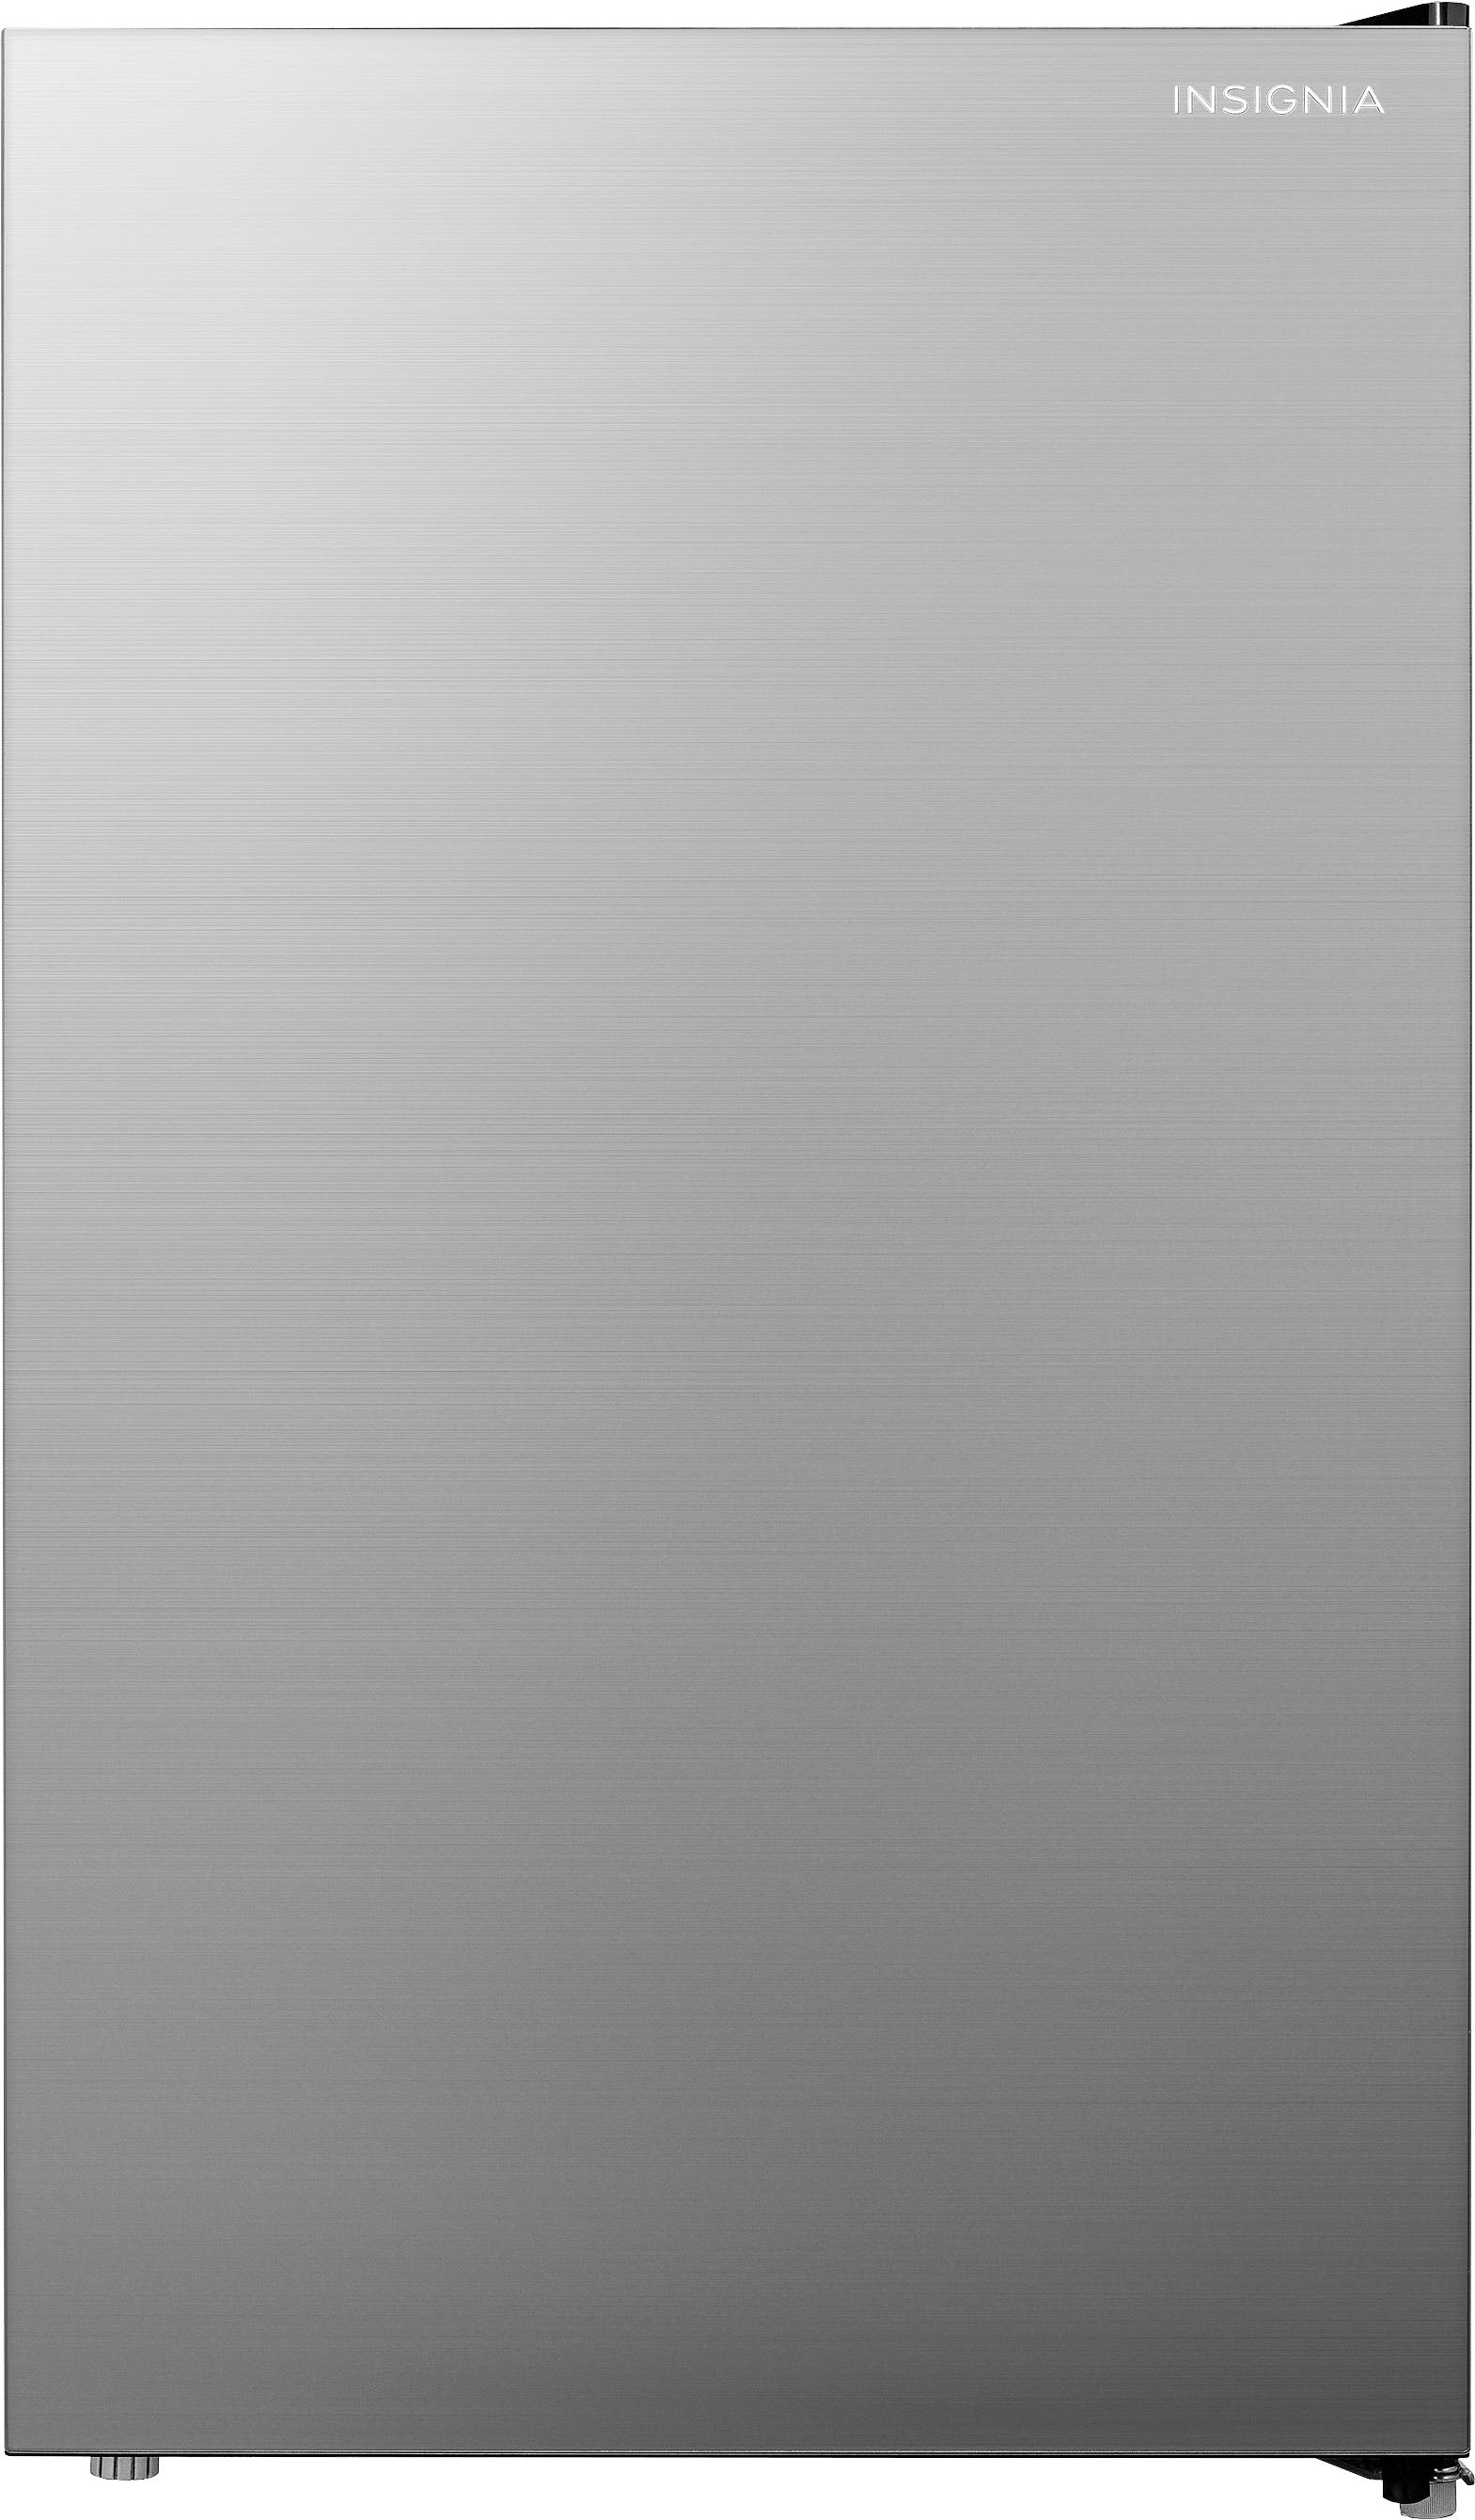 Insignia 4.4 Cubic Foot Mini Fridge, Refrigerator, No Freezer, Graphite Silver